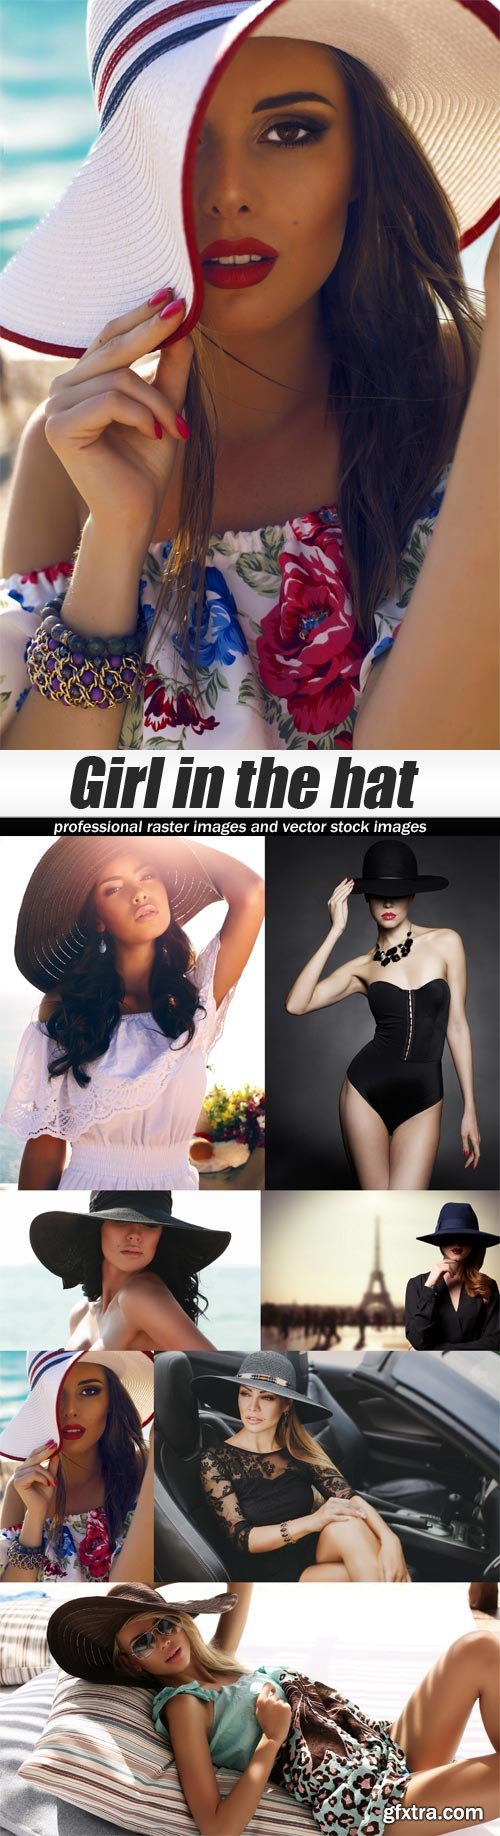 Girl in the hat